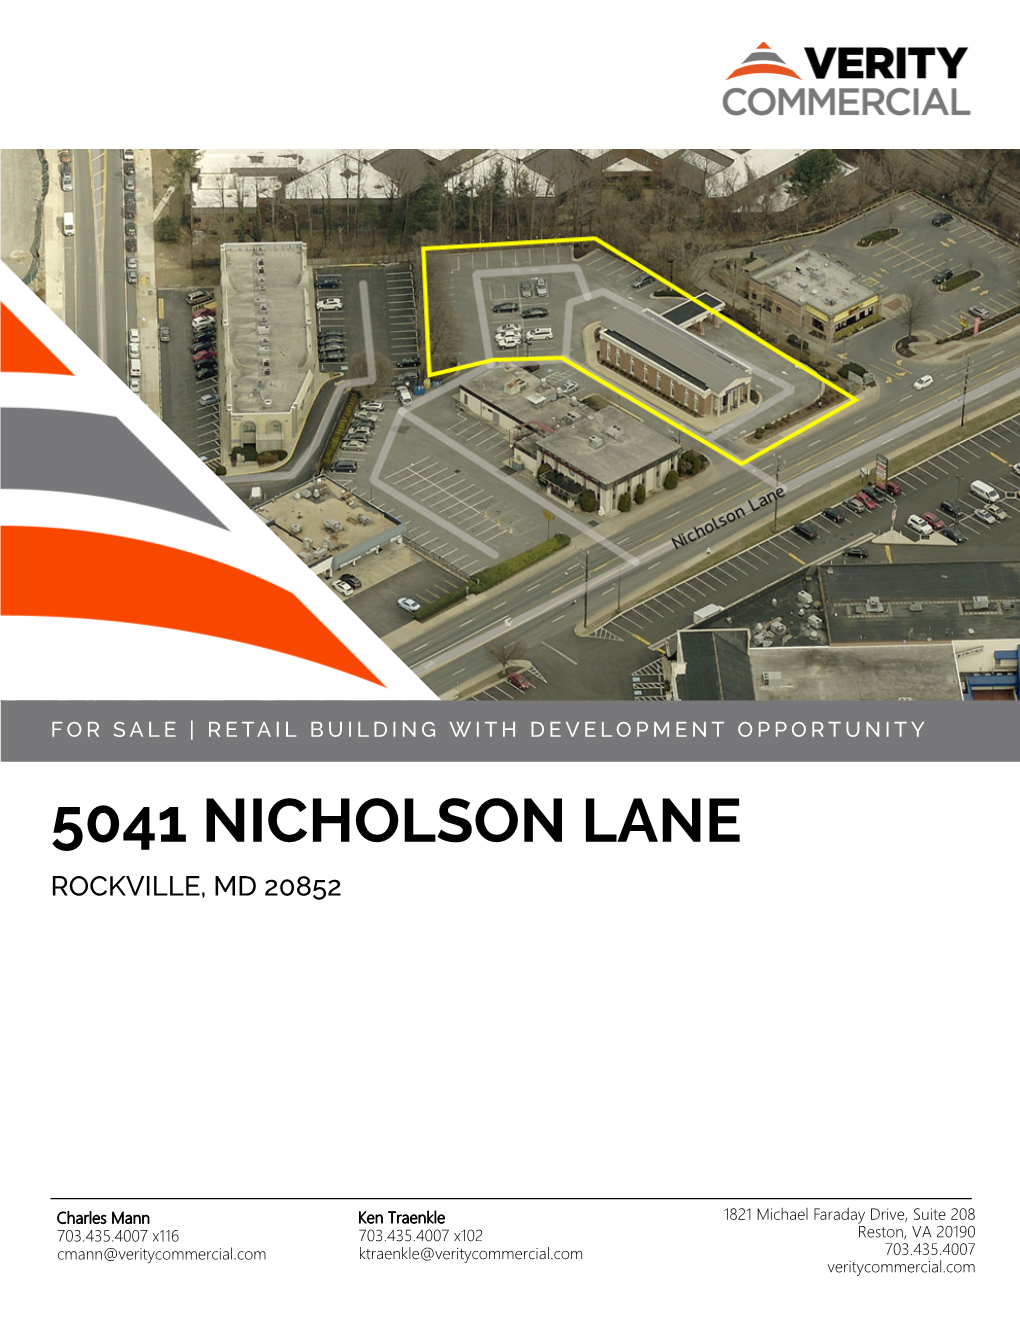 5041 Nicholson Lane Rockville, Md 20852